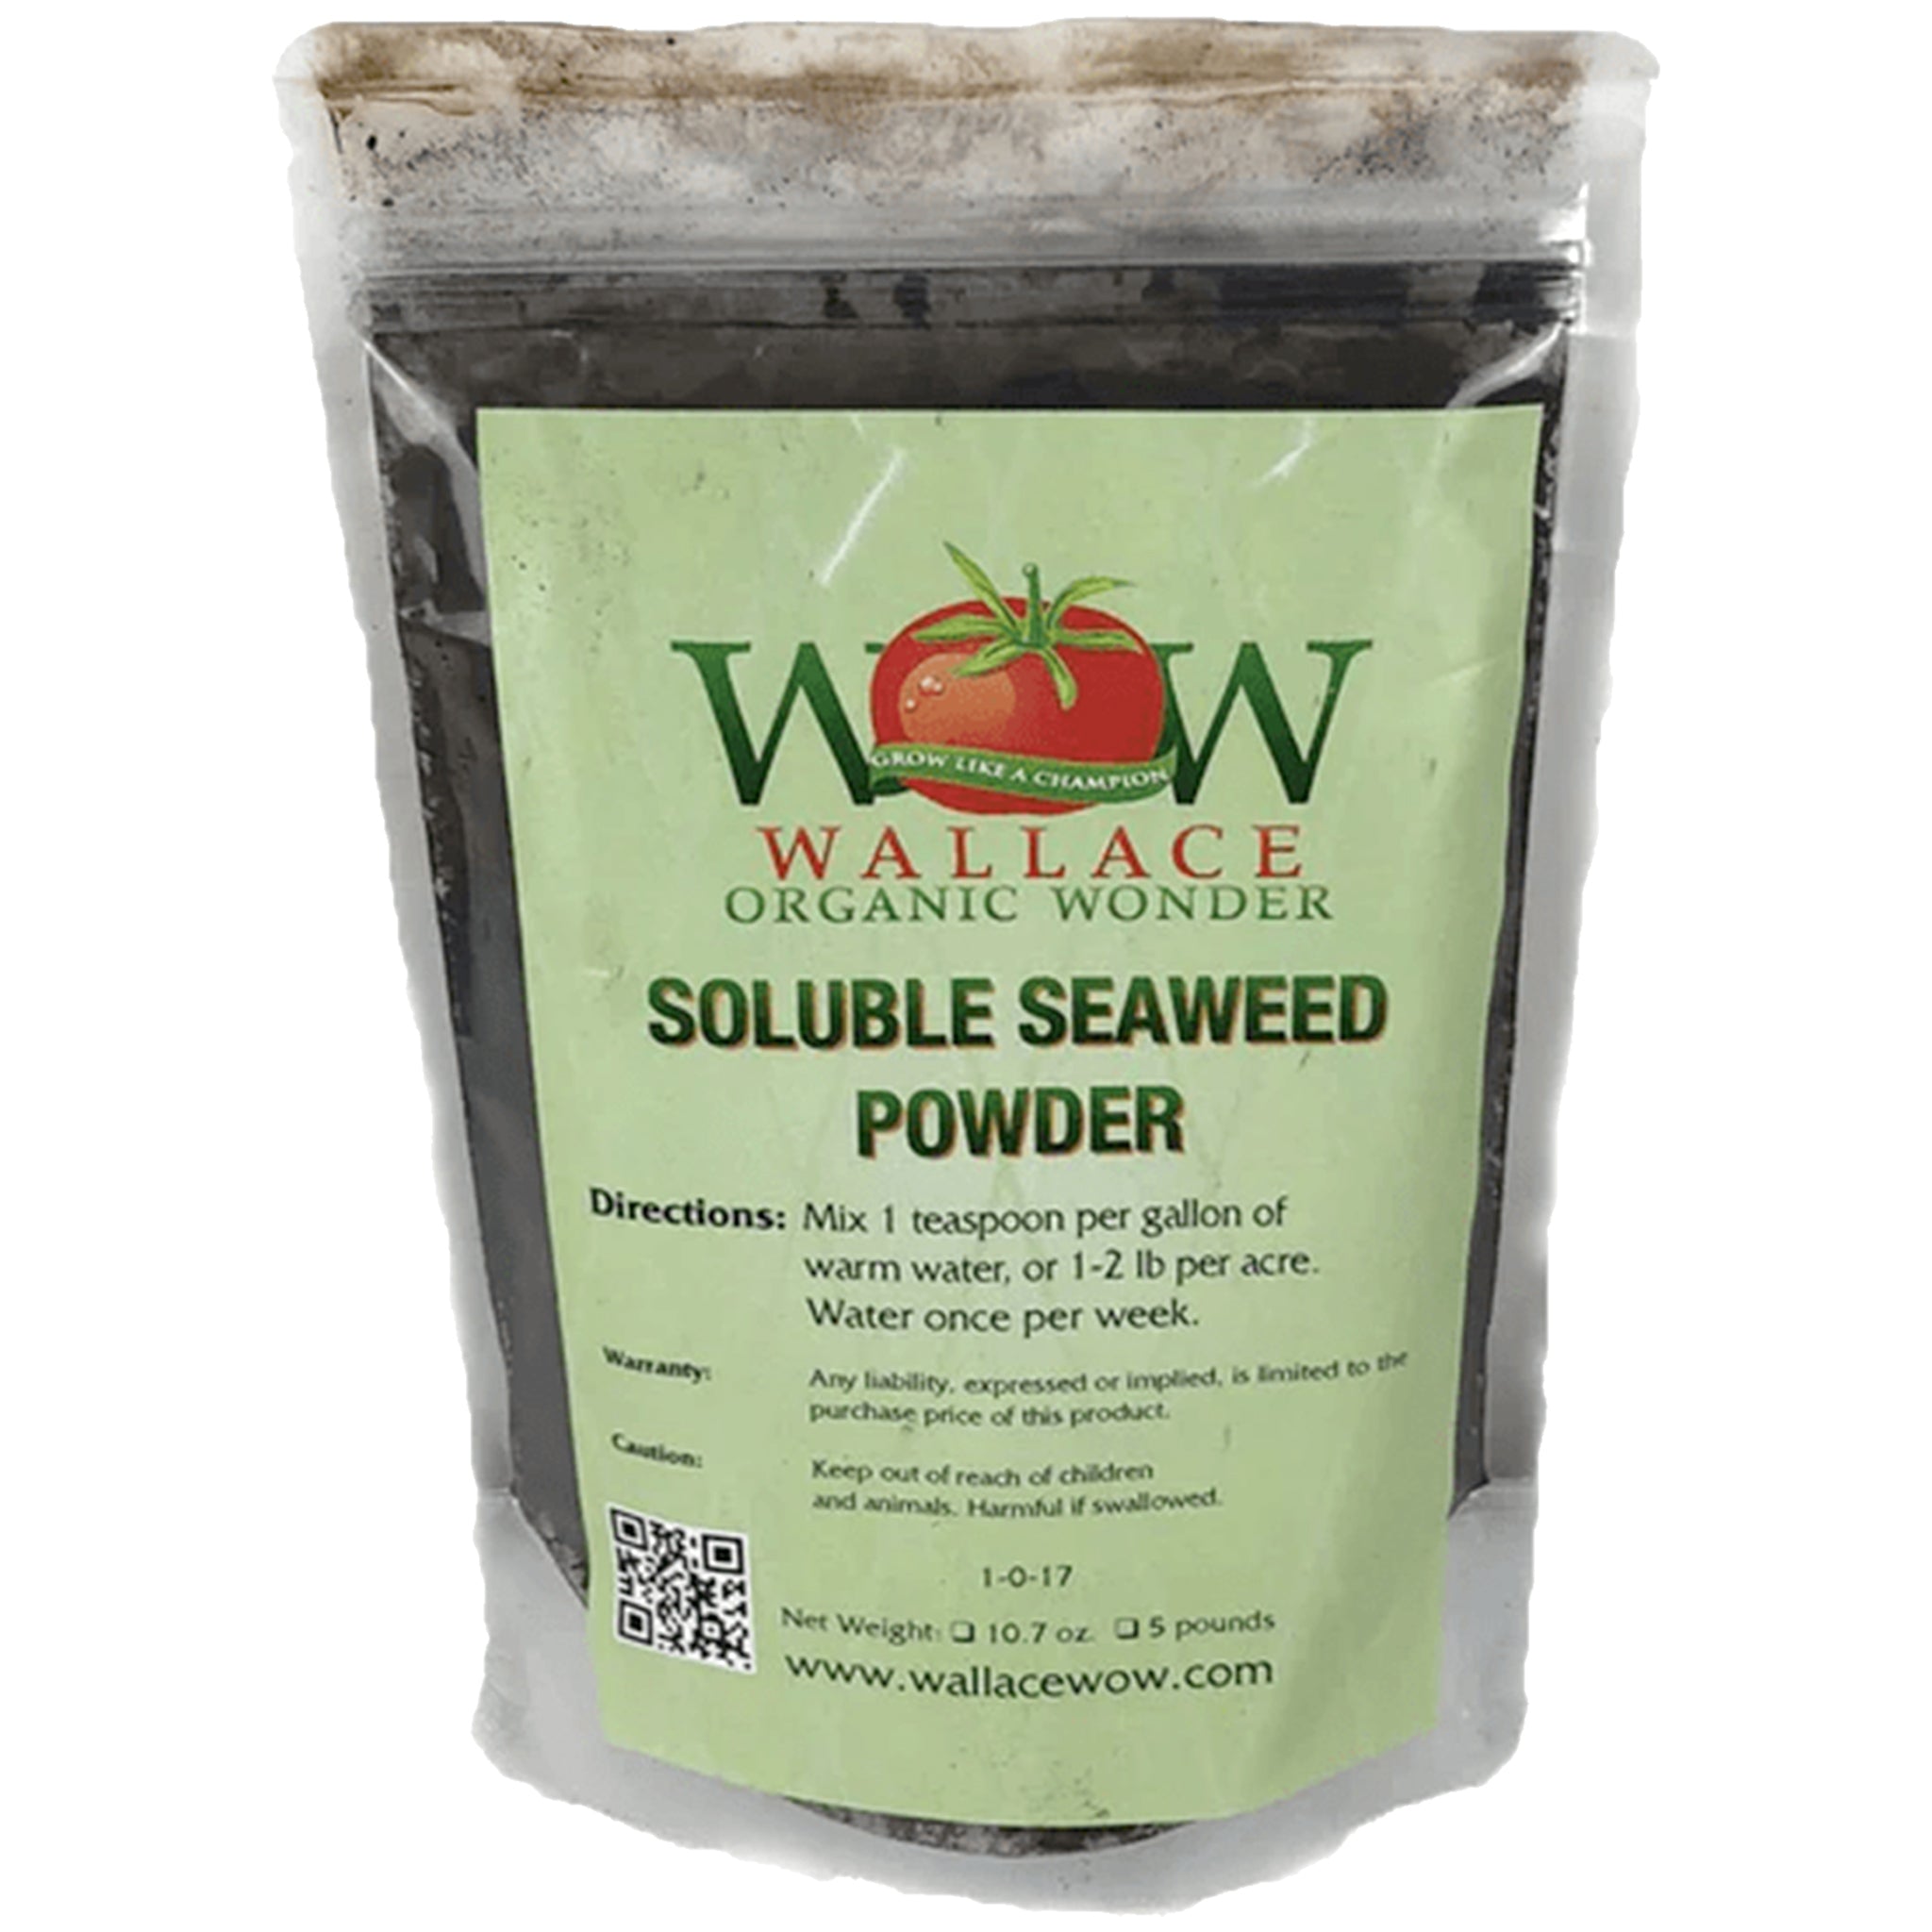 Soluble Seaweed Powder Wallace Organic Wonder